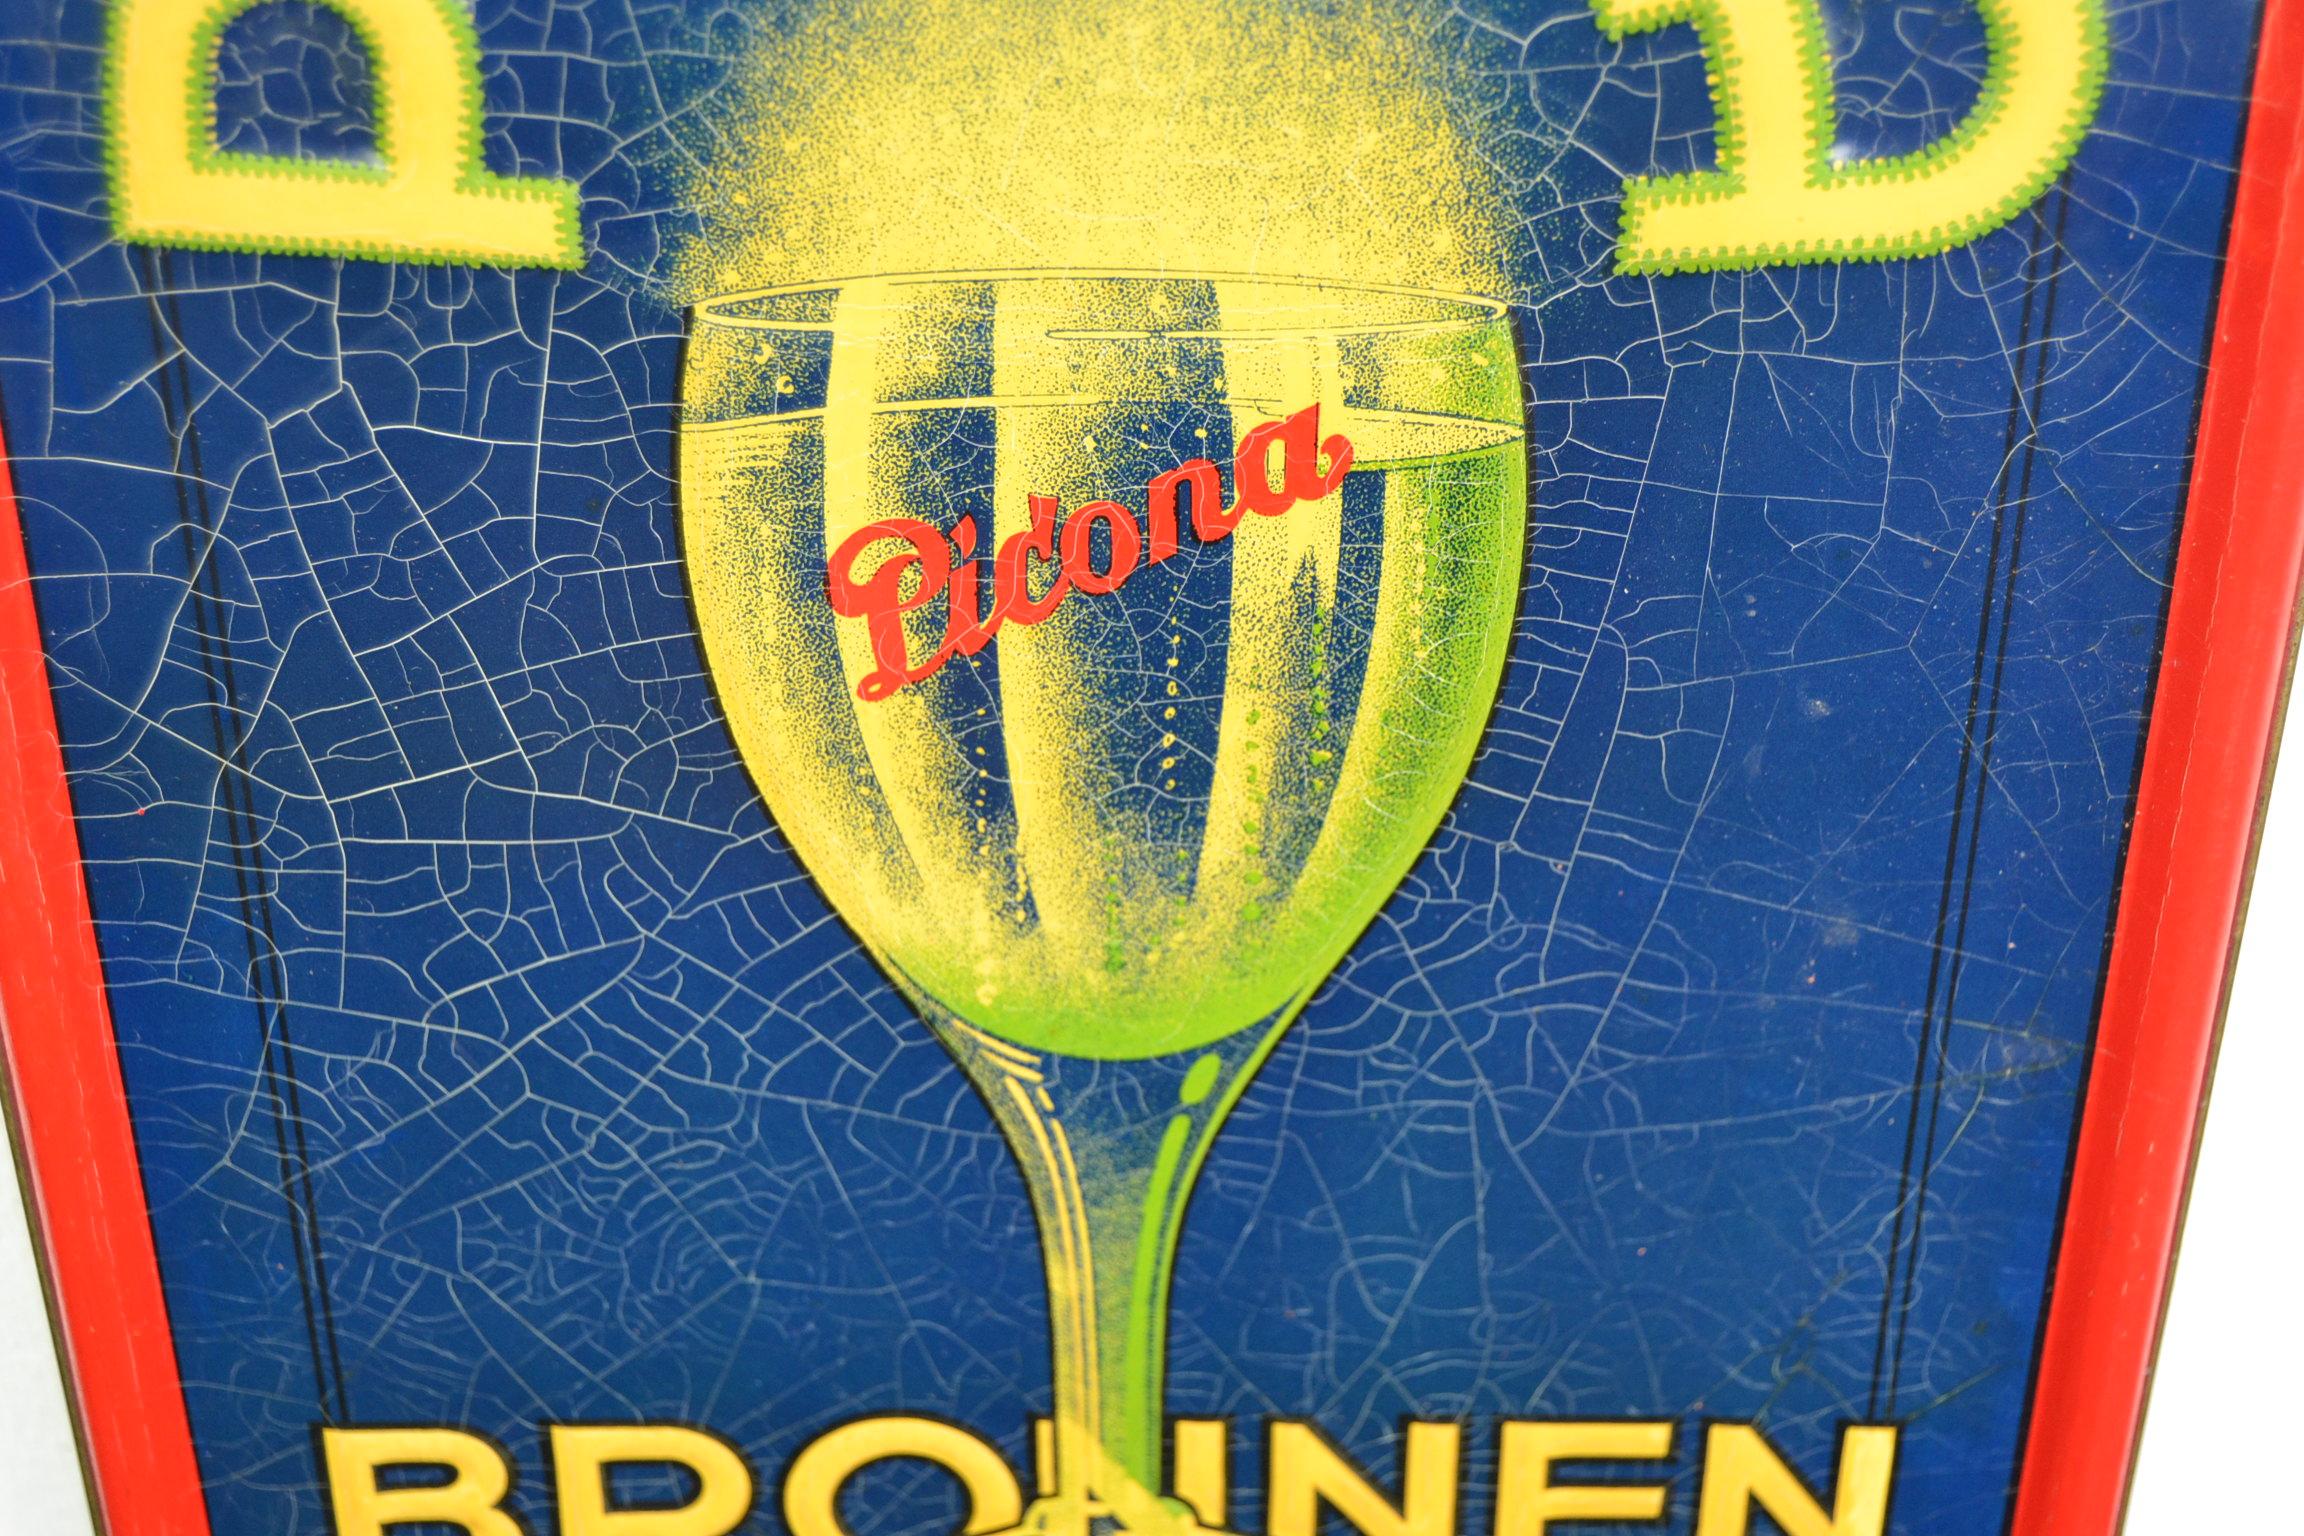 Tin Sign Lemonade, 1930s, Belgium 1